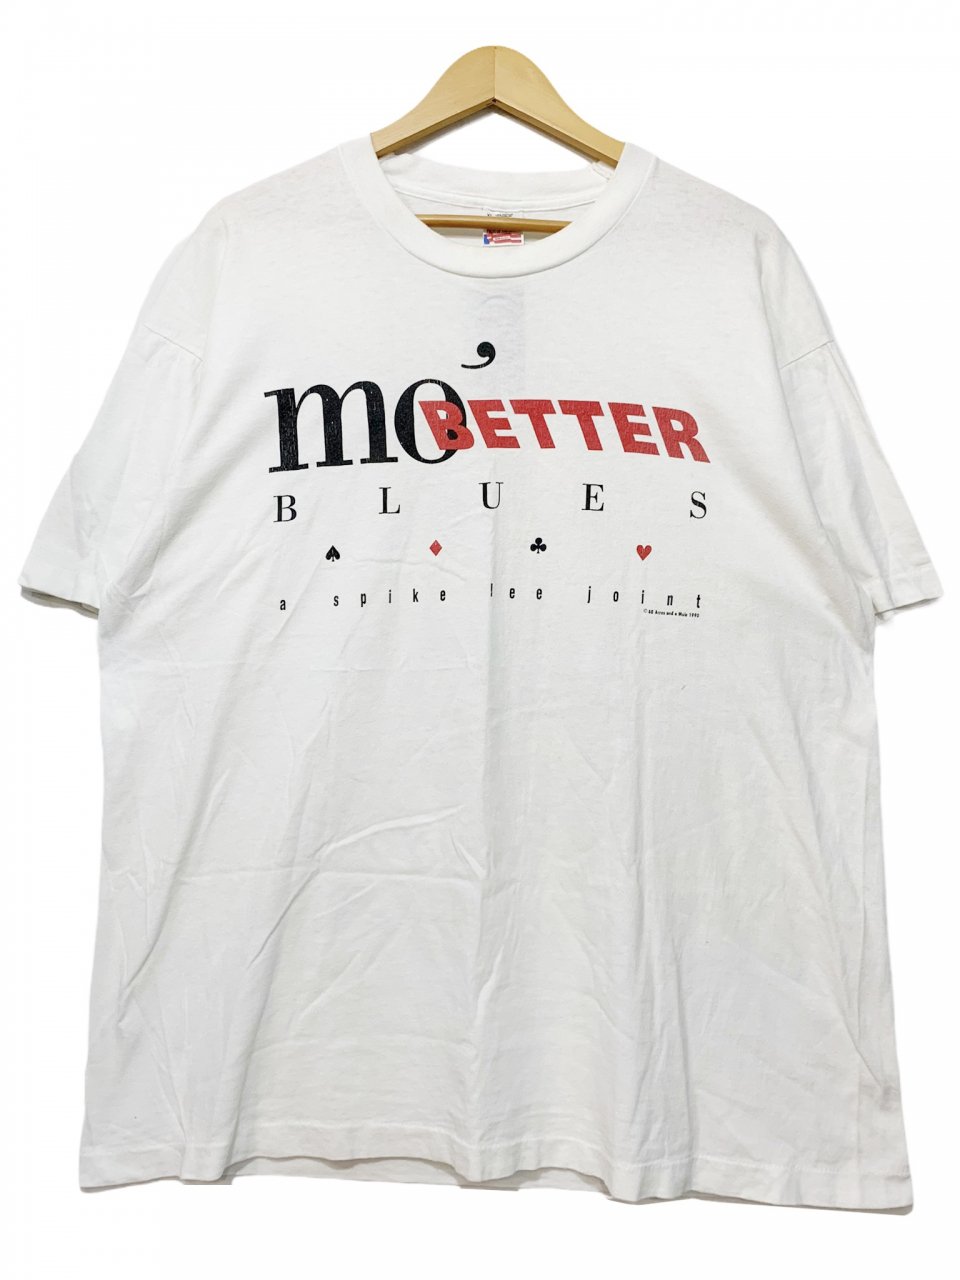 Usa製 90年 Mo Better Blues Print S S Tee 白 Xl 90s モ ベターブルース Tシャツ Spike Lee スパイクリー 40acres 映画 ムービーt 古着 Newjoke Online Store